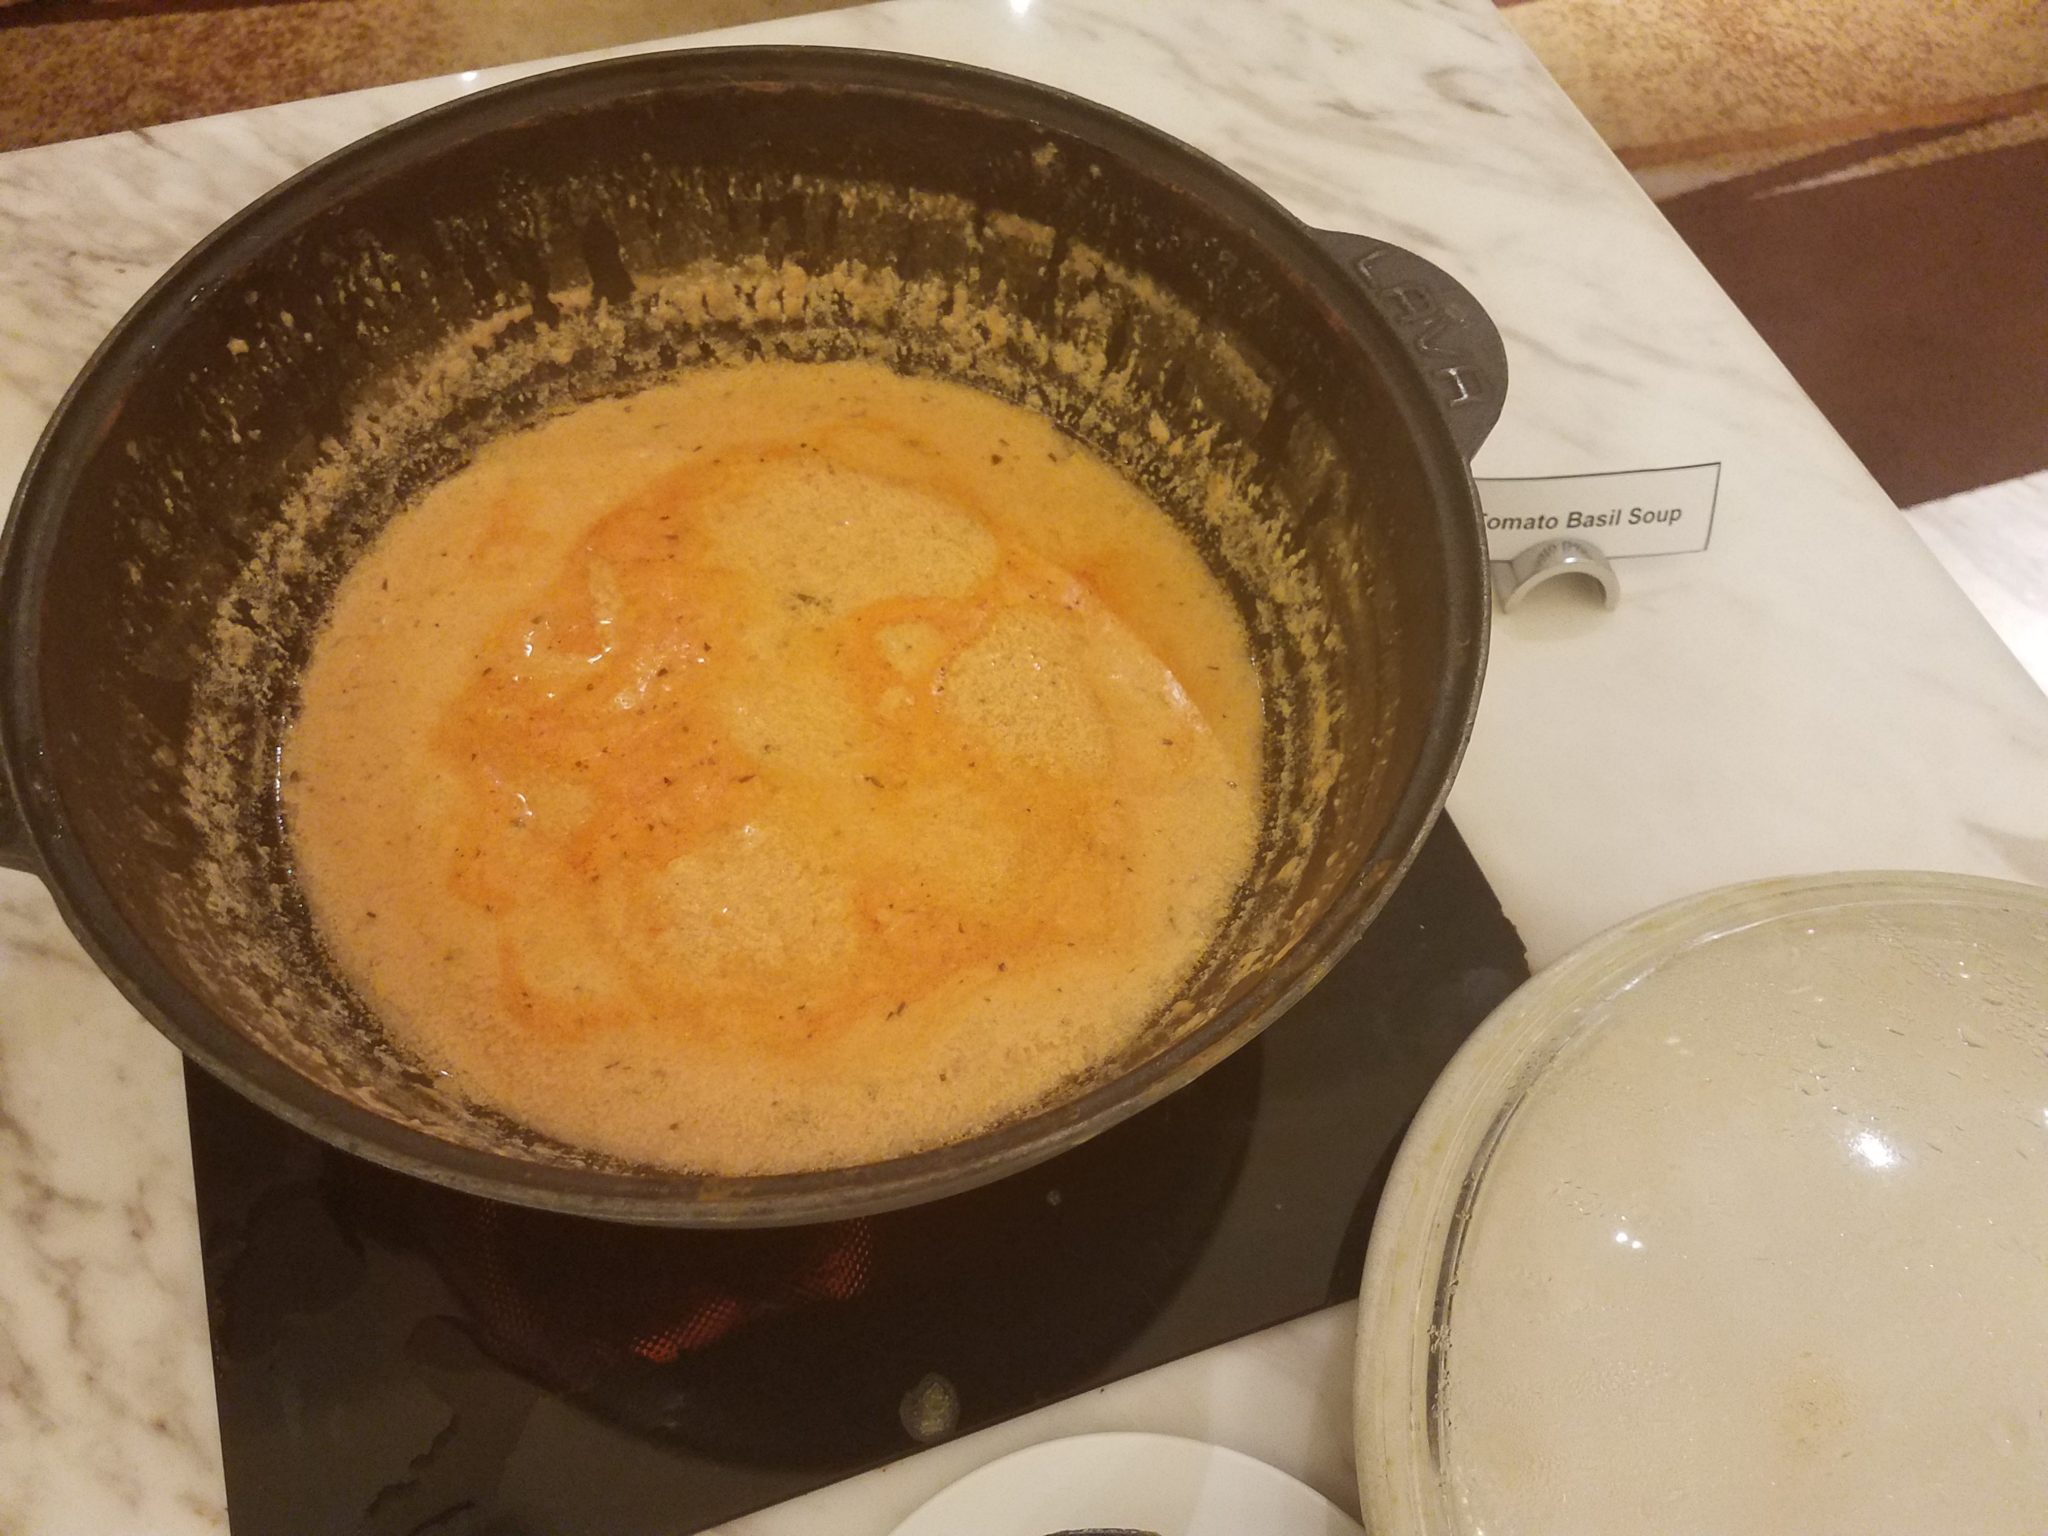 Great tomato basil soup